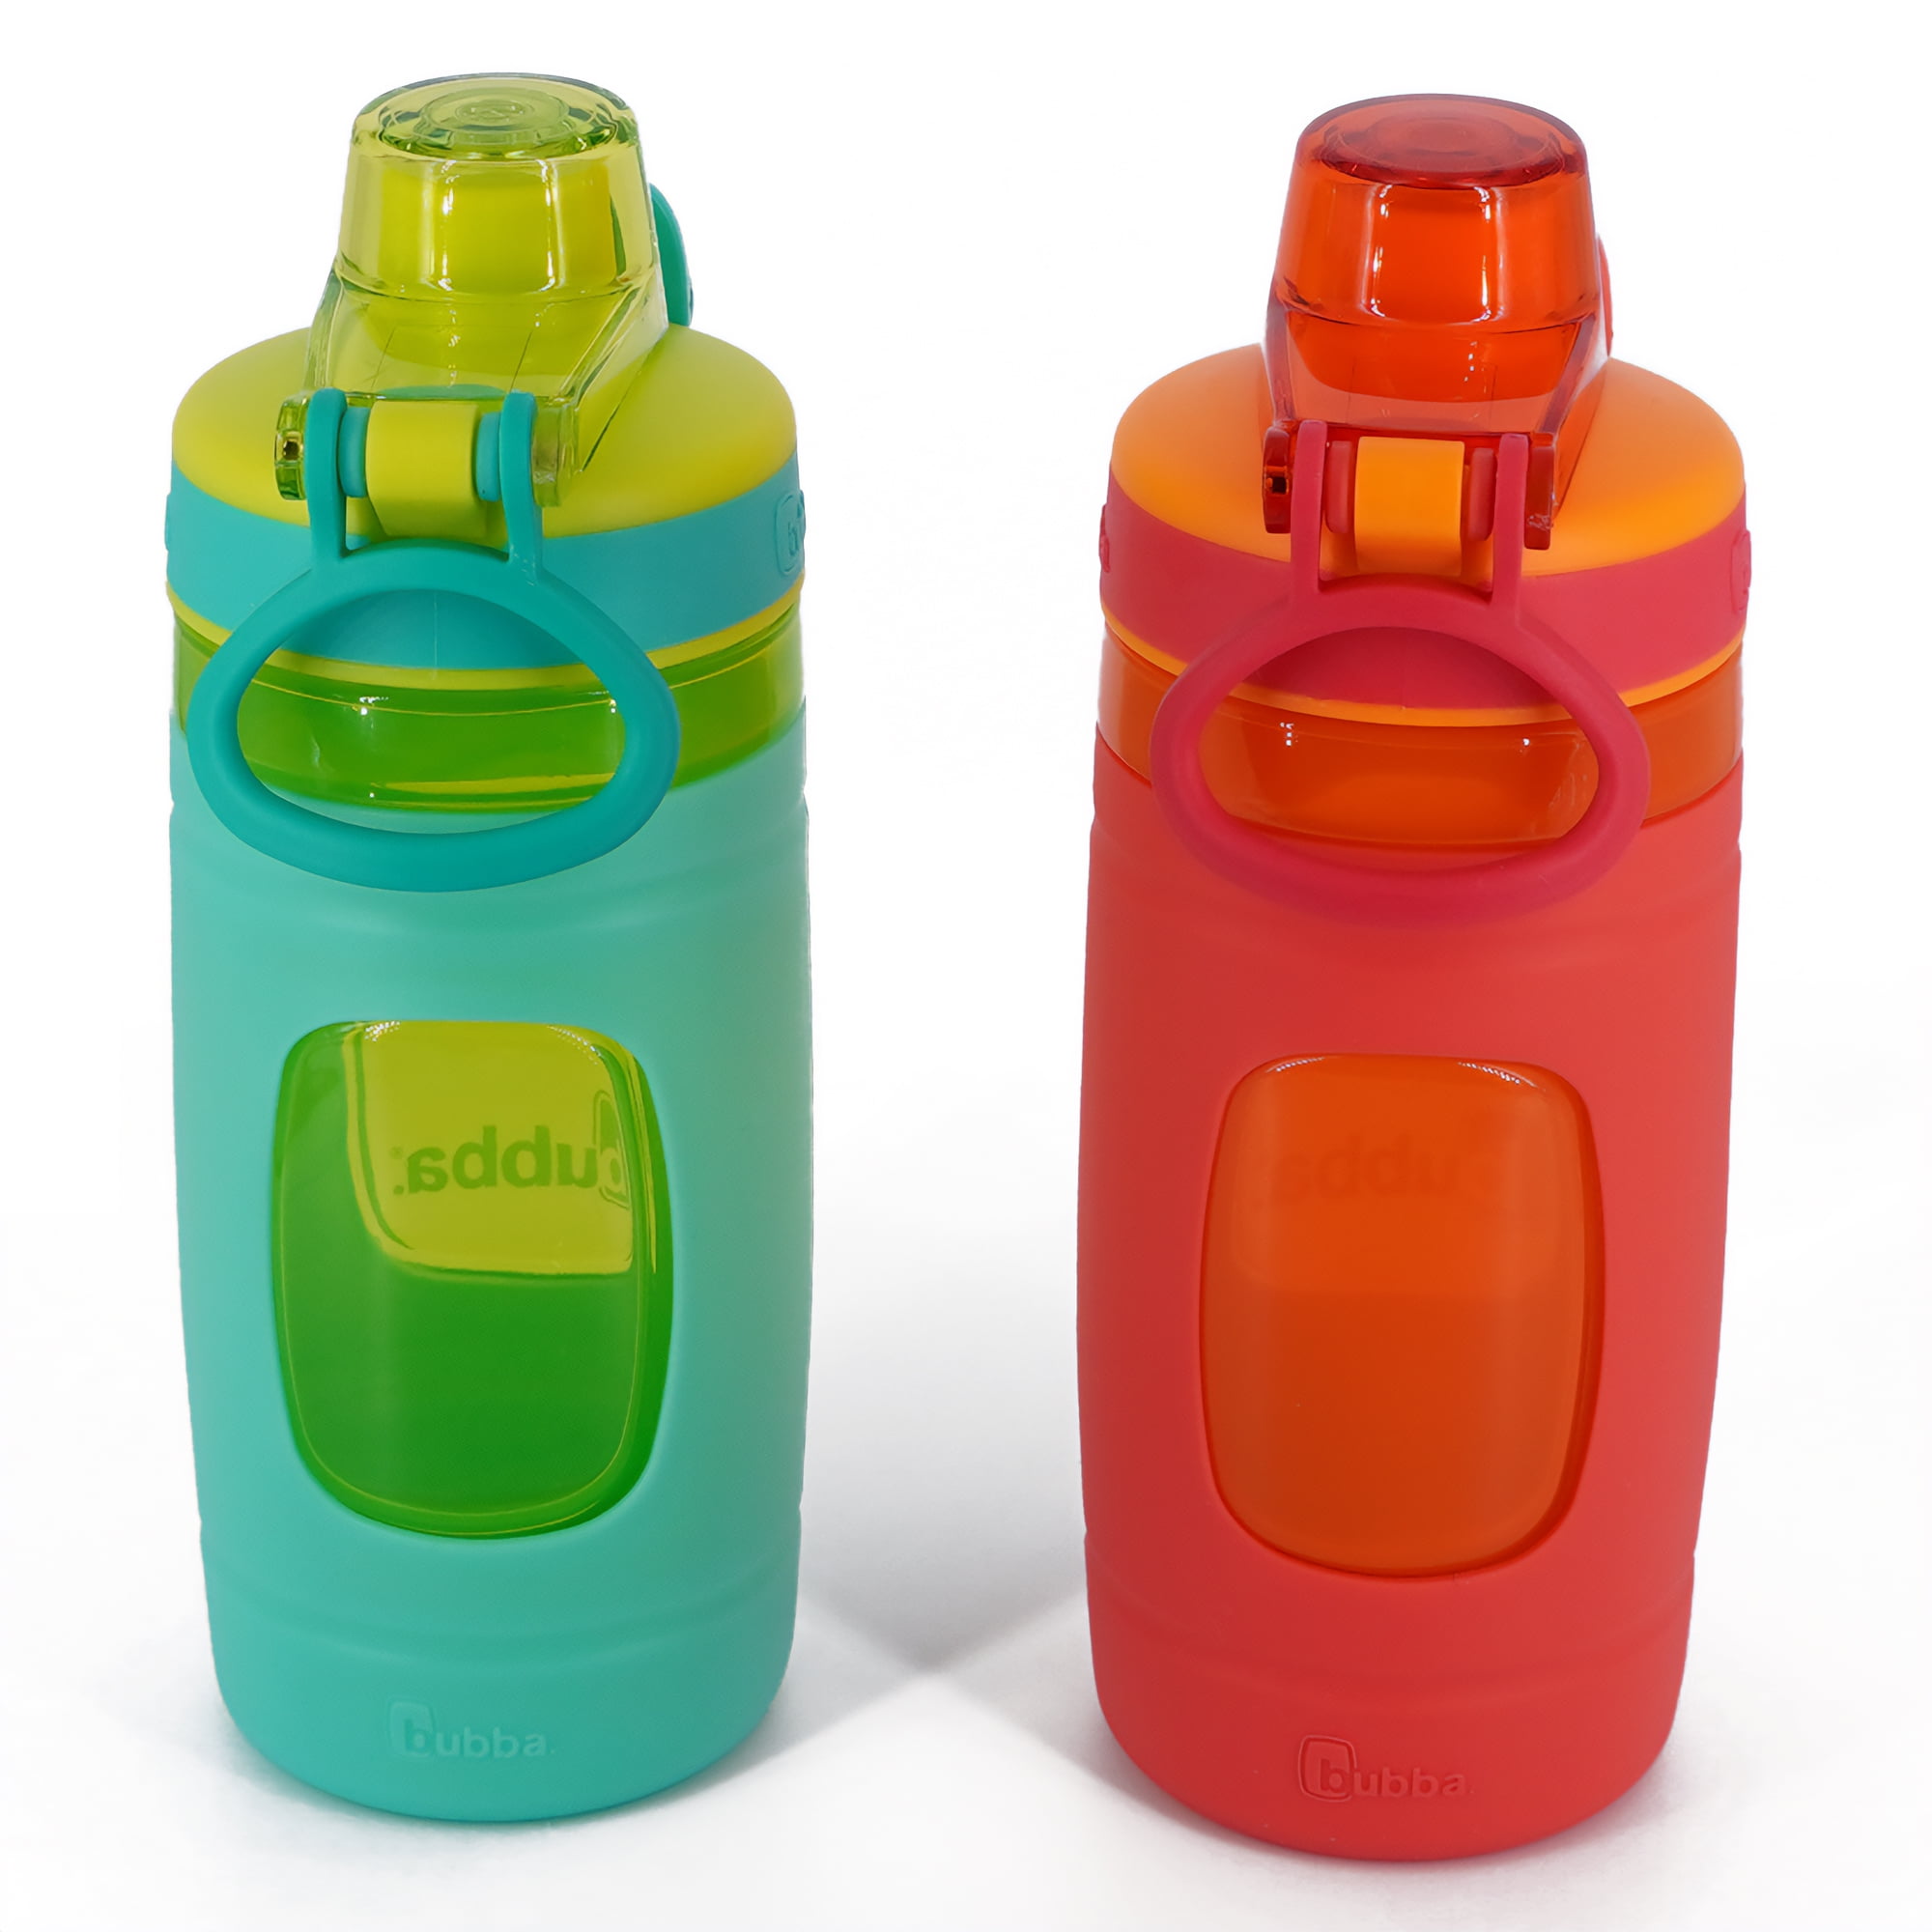  Bubba Brands Flo Kids Water Bottle with Leak-Proof Lid, 16oz  Dishwasher Safe Water Bottle for Kids, 2-Pack Island Teal Wash & Pool Blue  : Sports & Outdoors